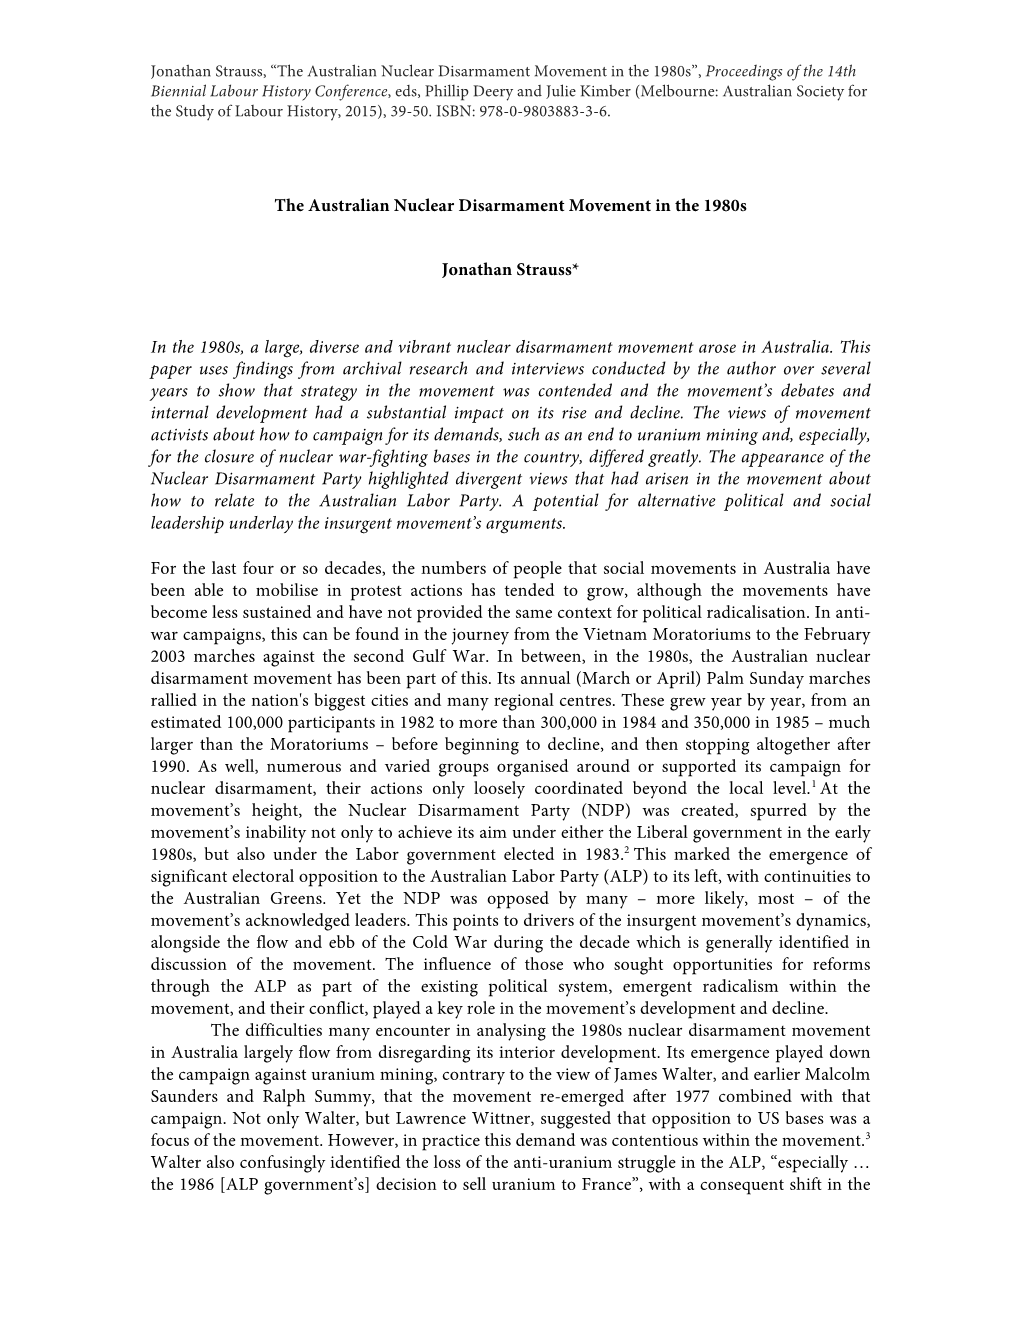 The Australian Nuclear Disarmament Movement LH Proceedings